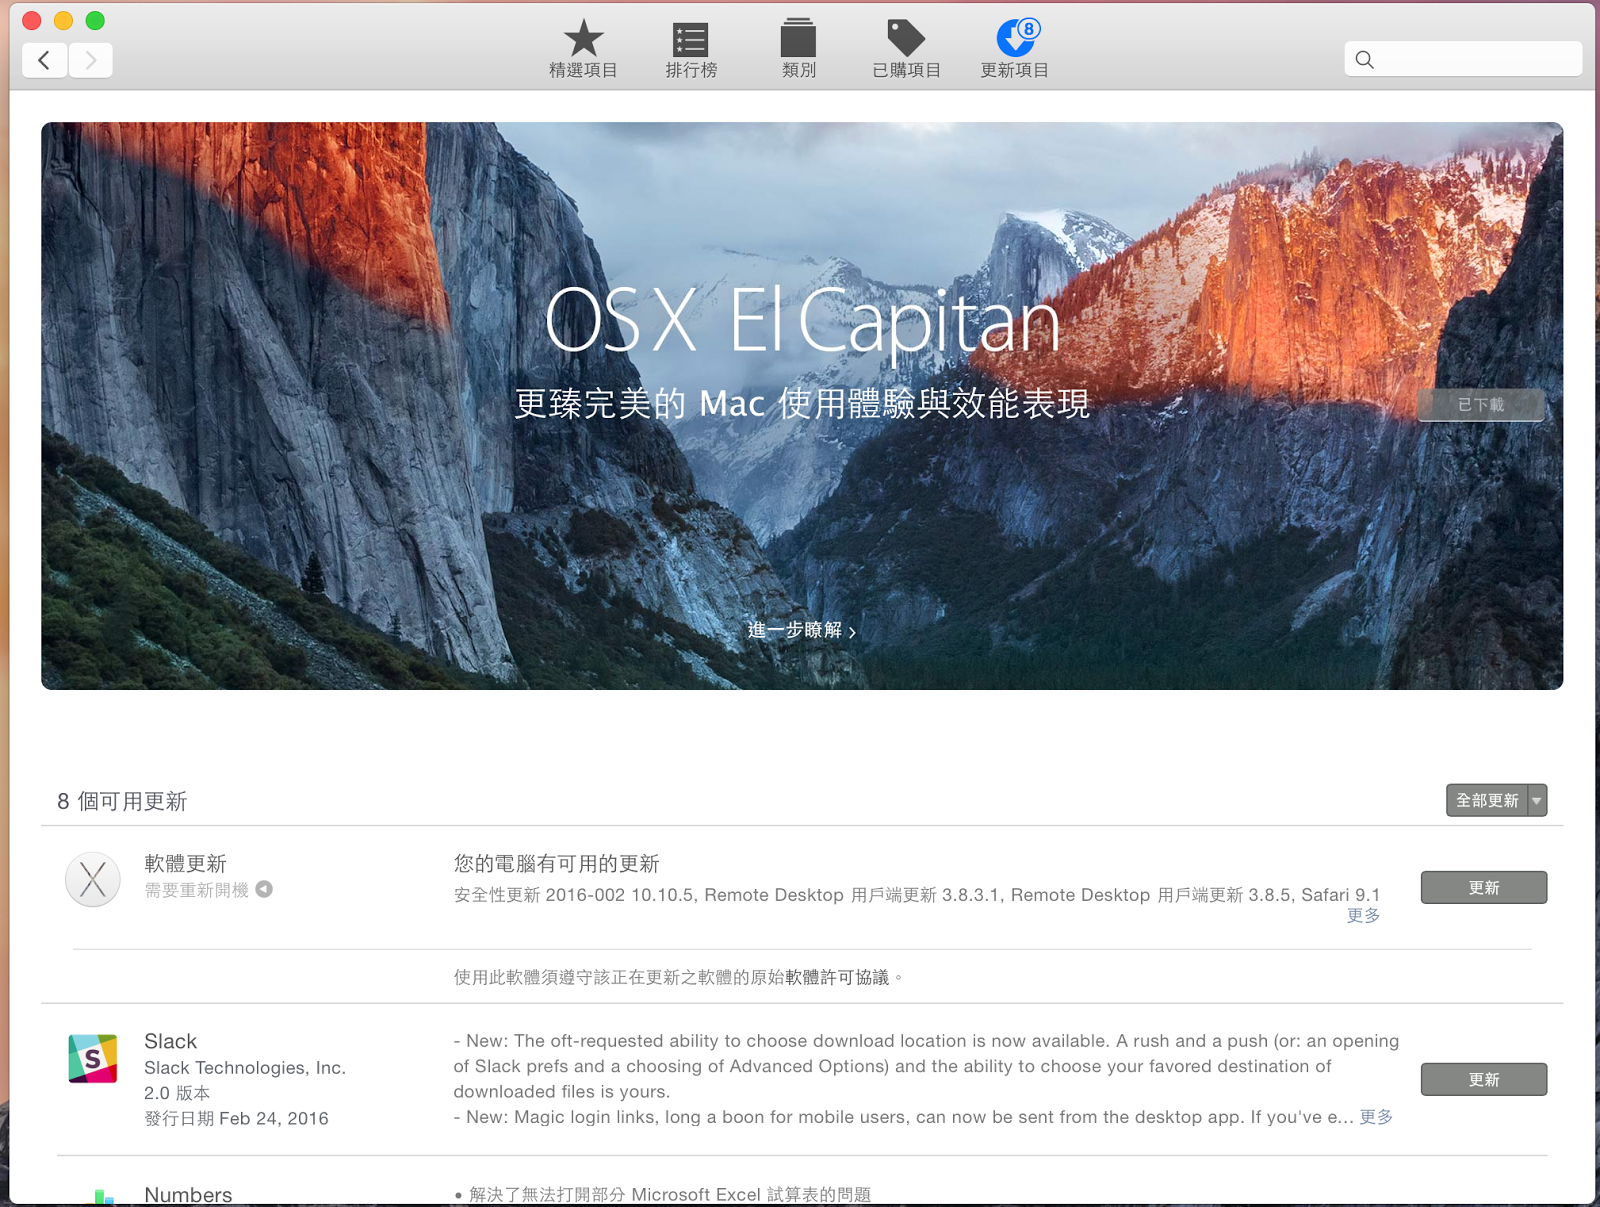 download mac os x el capitan iso to use on windows 10